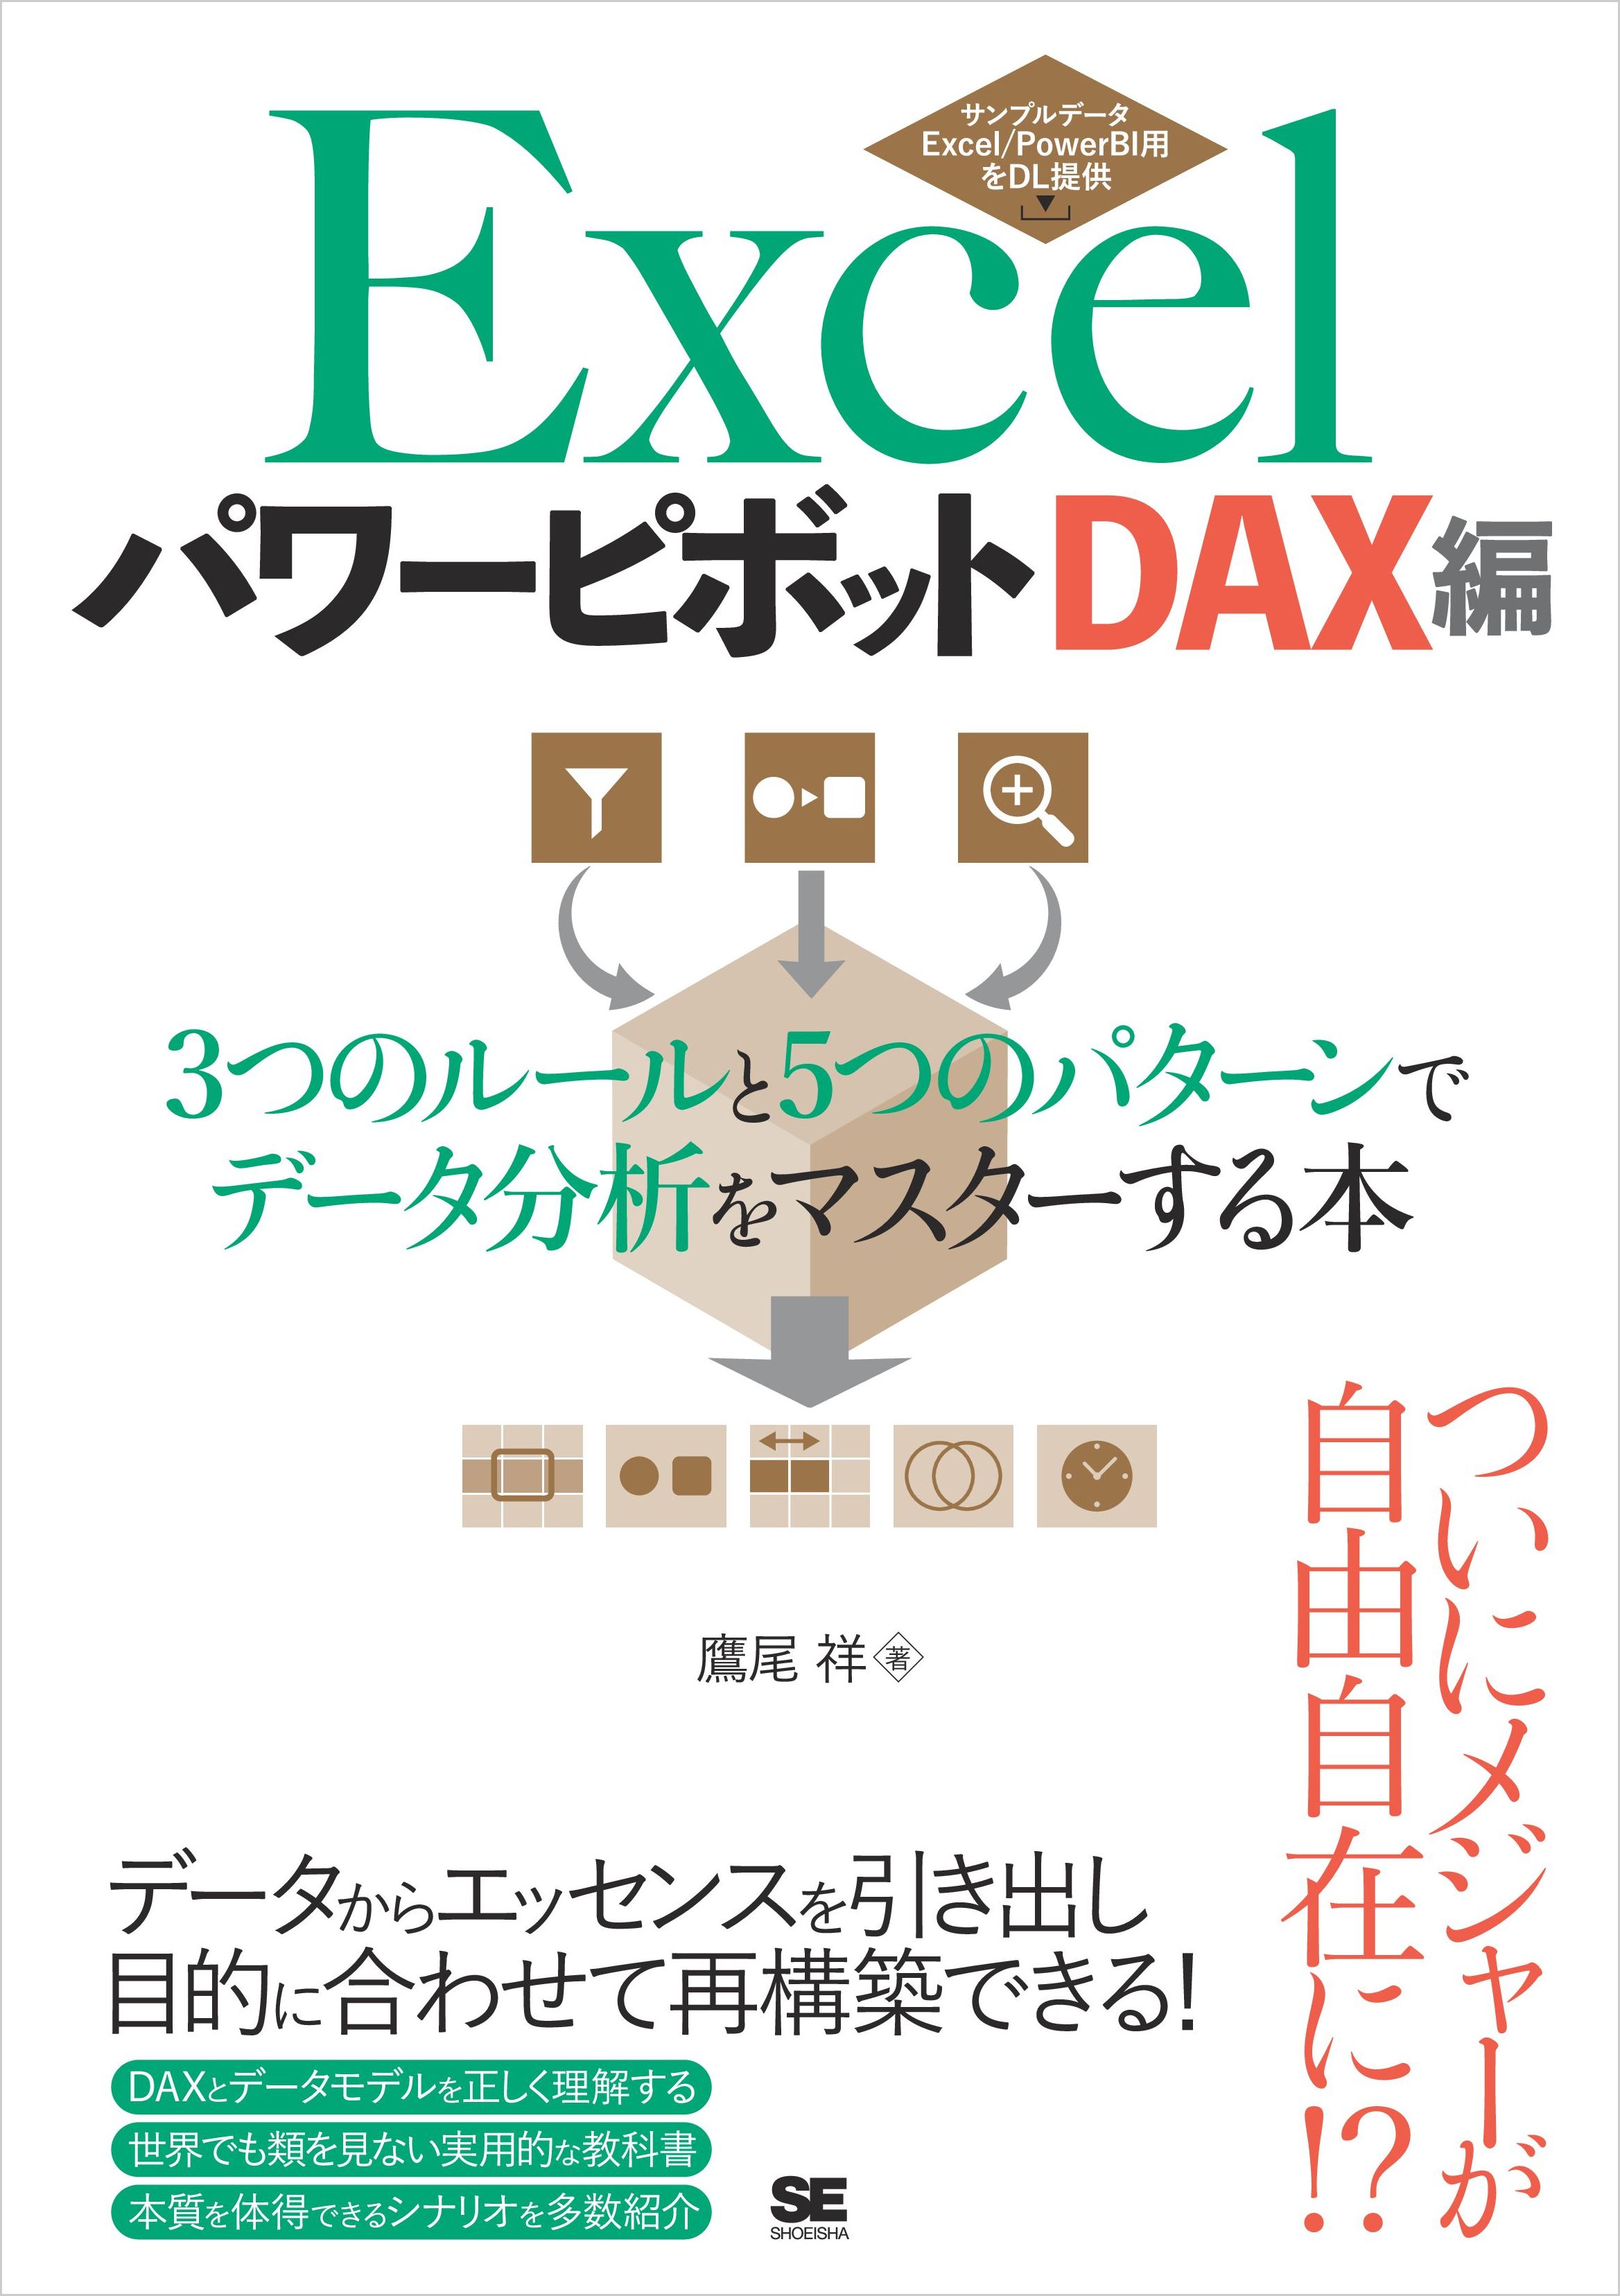 Excelパワーピボット 鷹尾祥